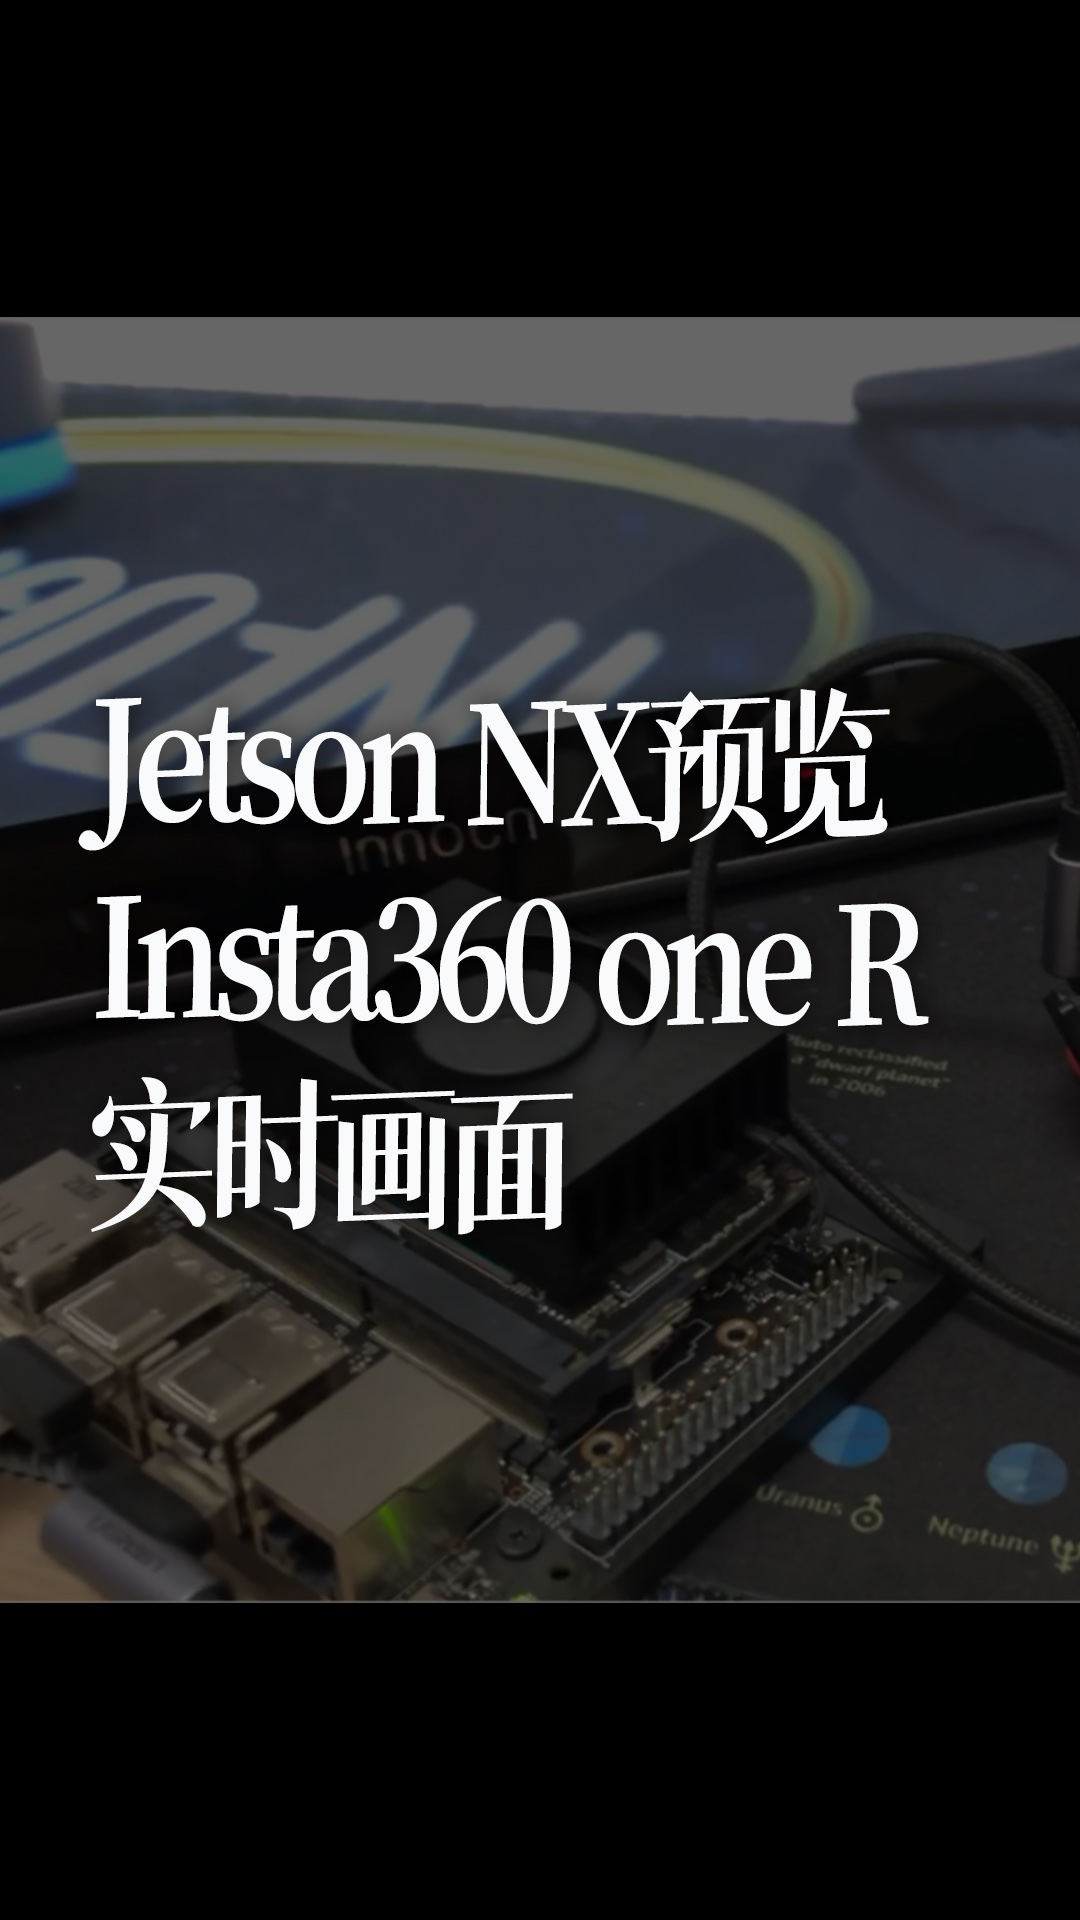 Jetson NX预览Insta360 one R实时画面